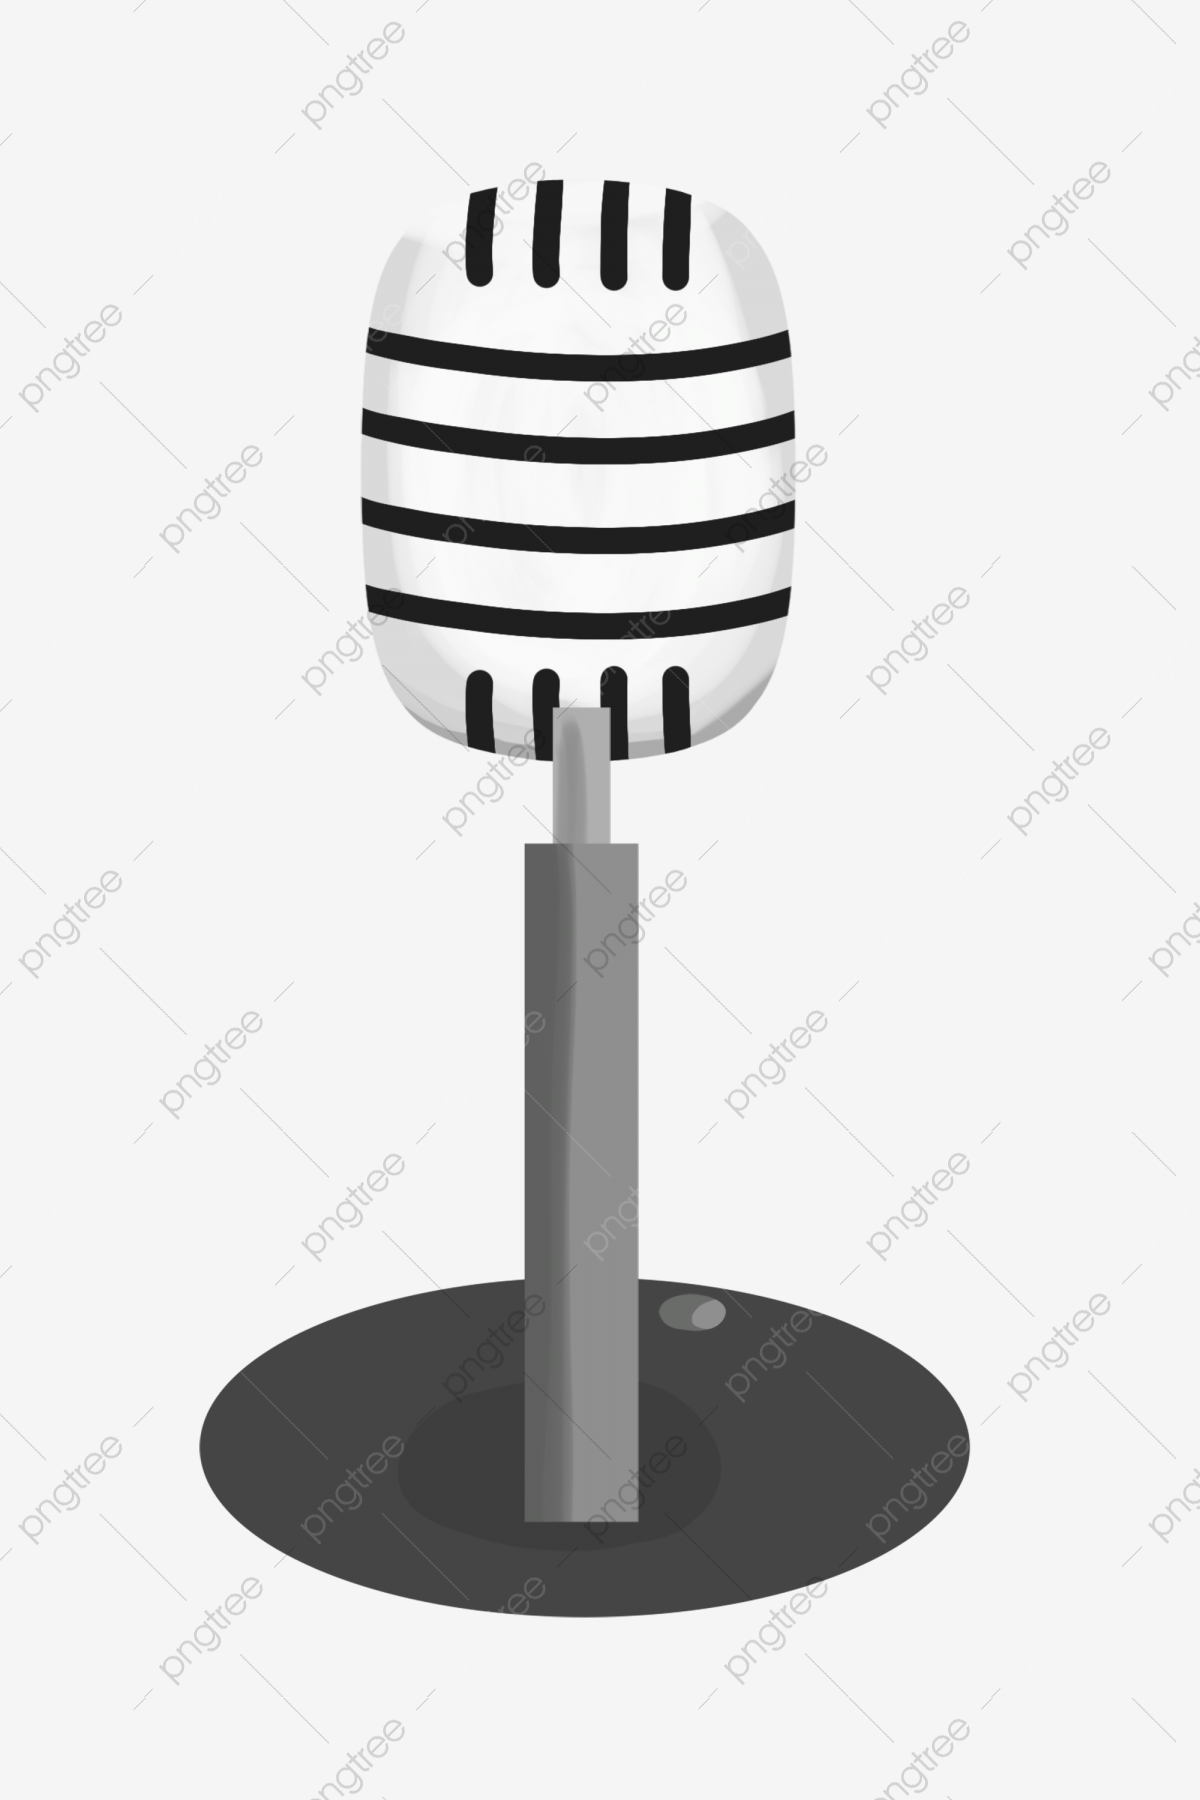 karaoke clipart simple microphone